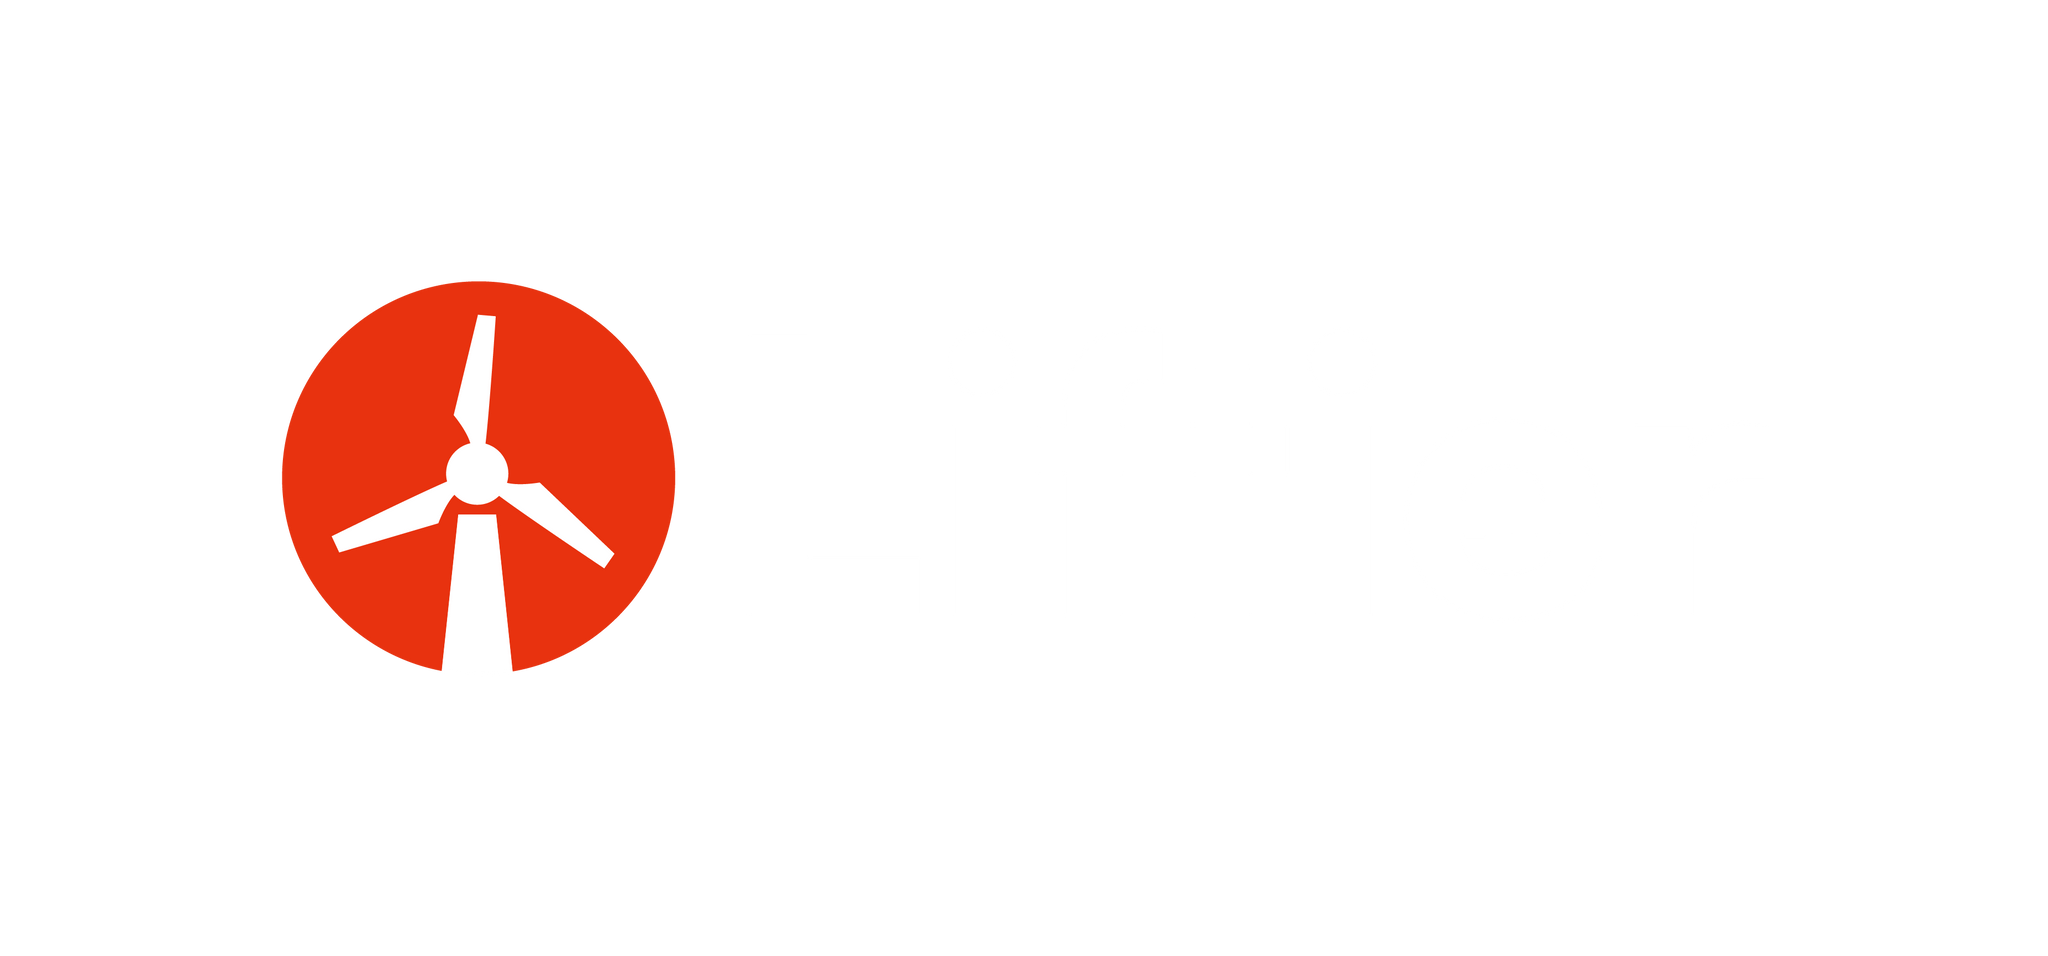 Liftier Logo with light text